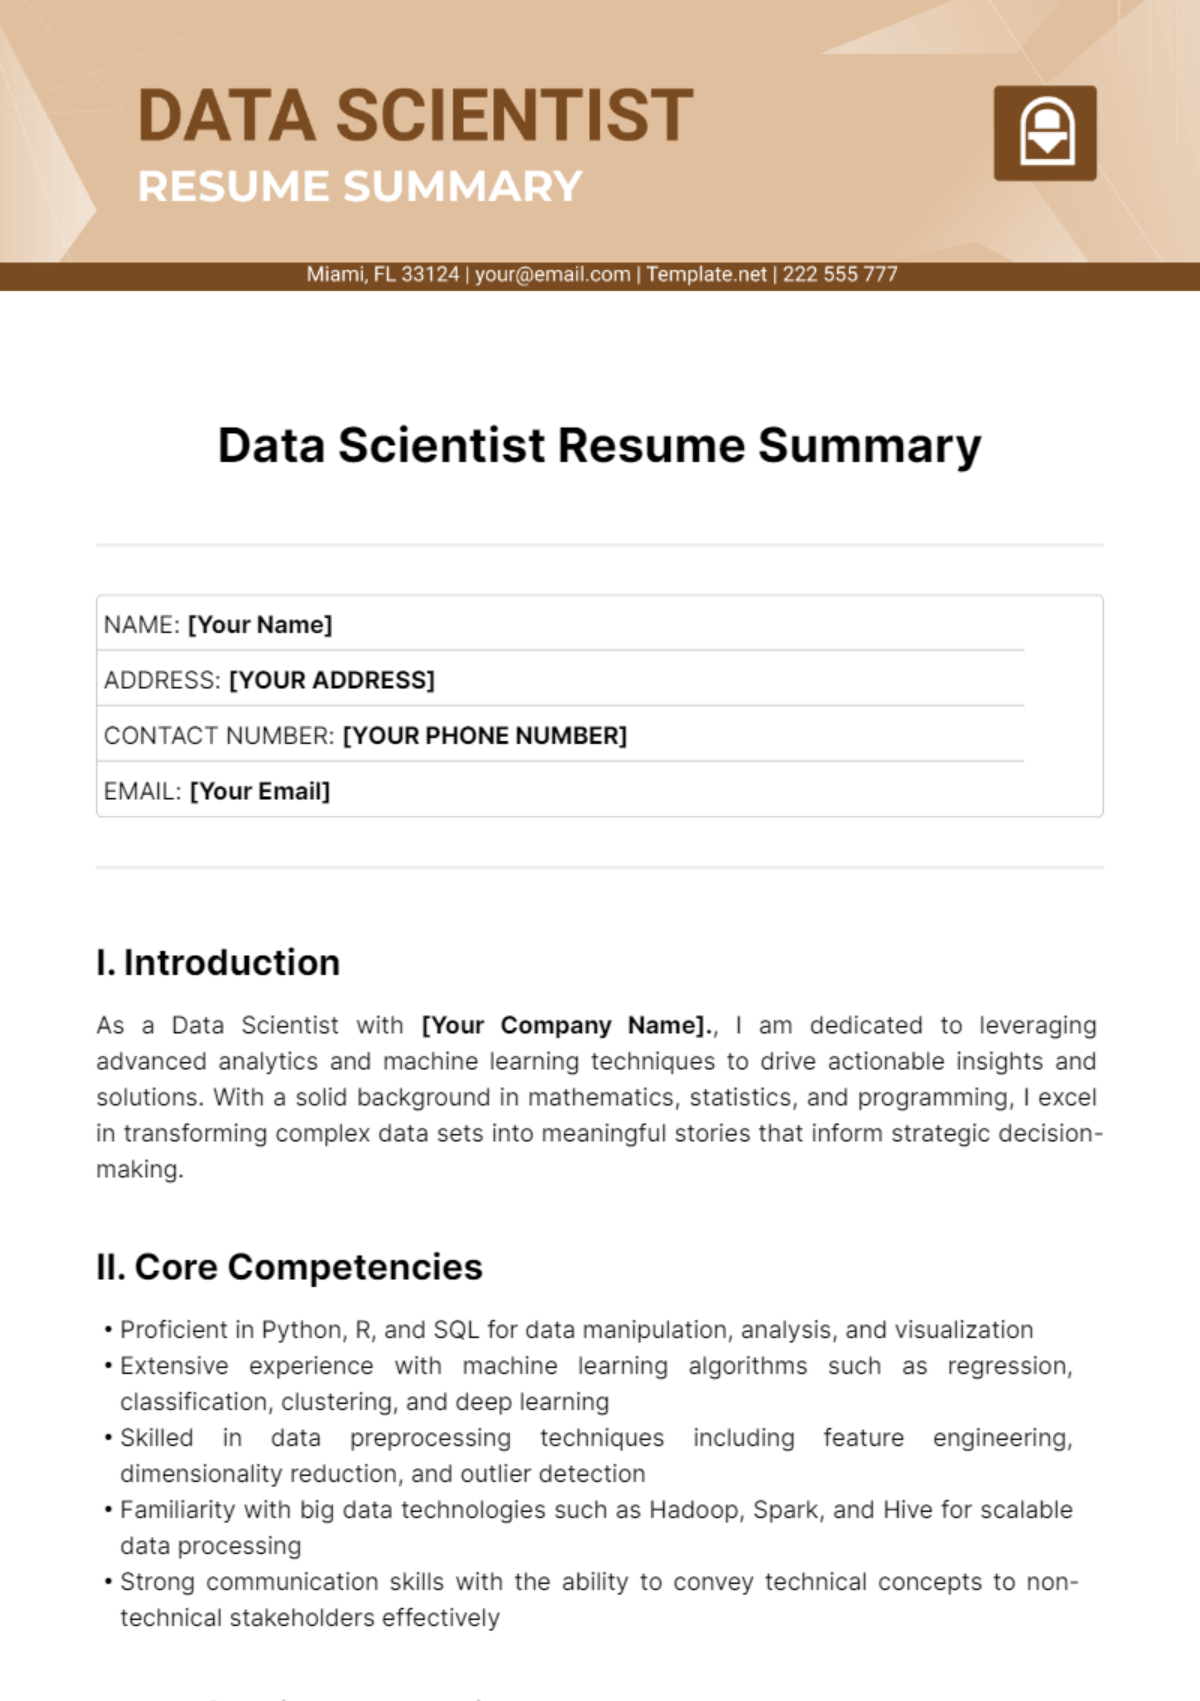 Free Data Scientist Resume Summary Template